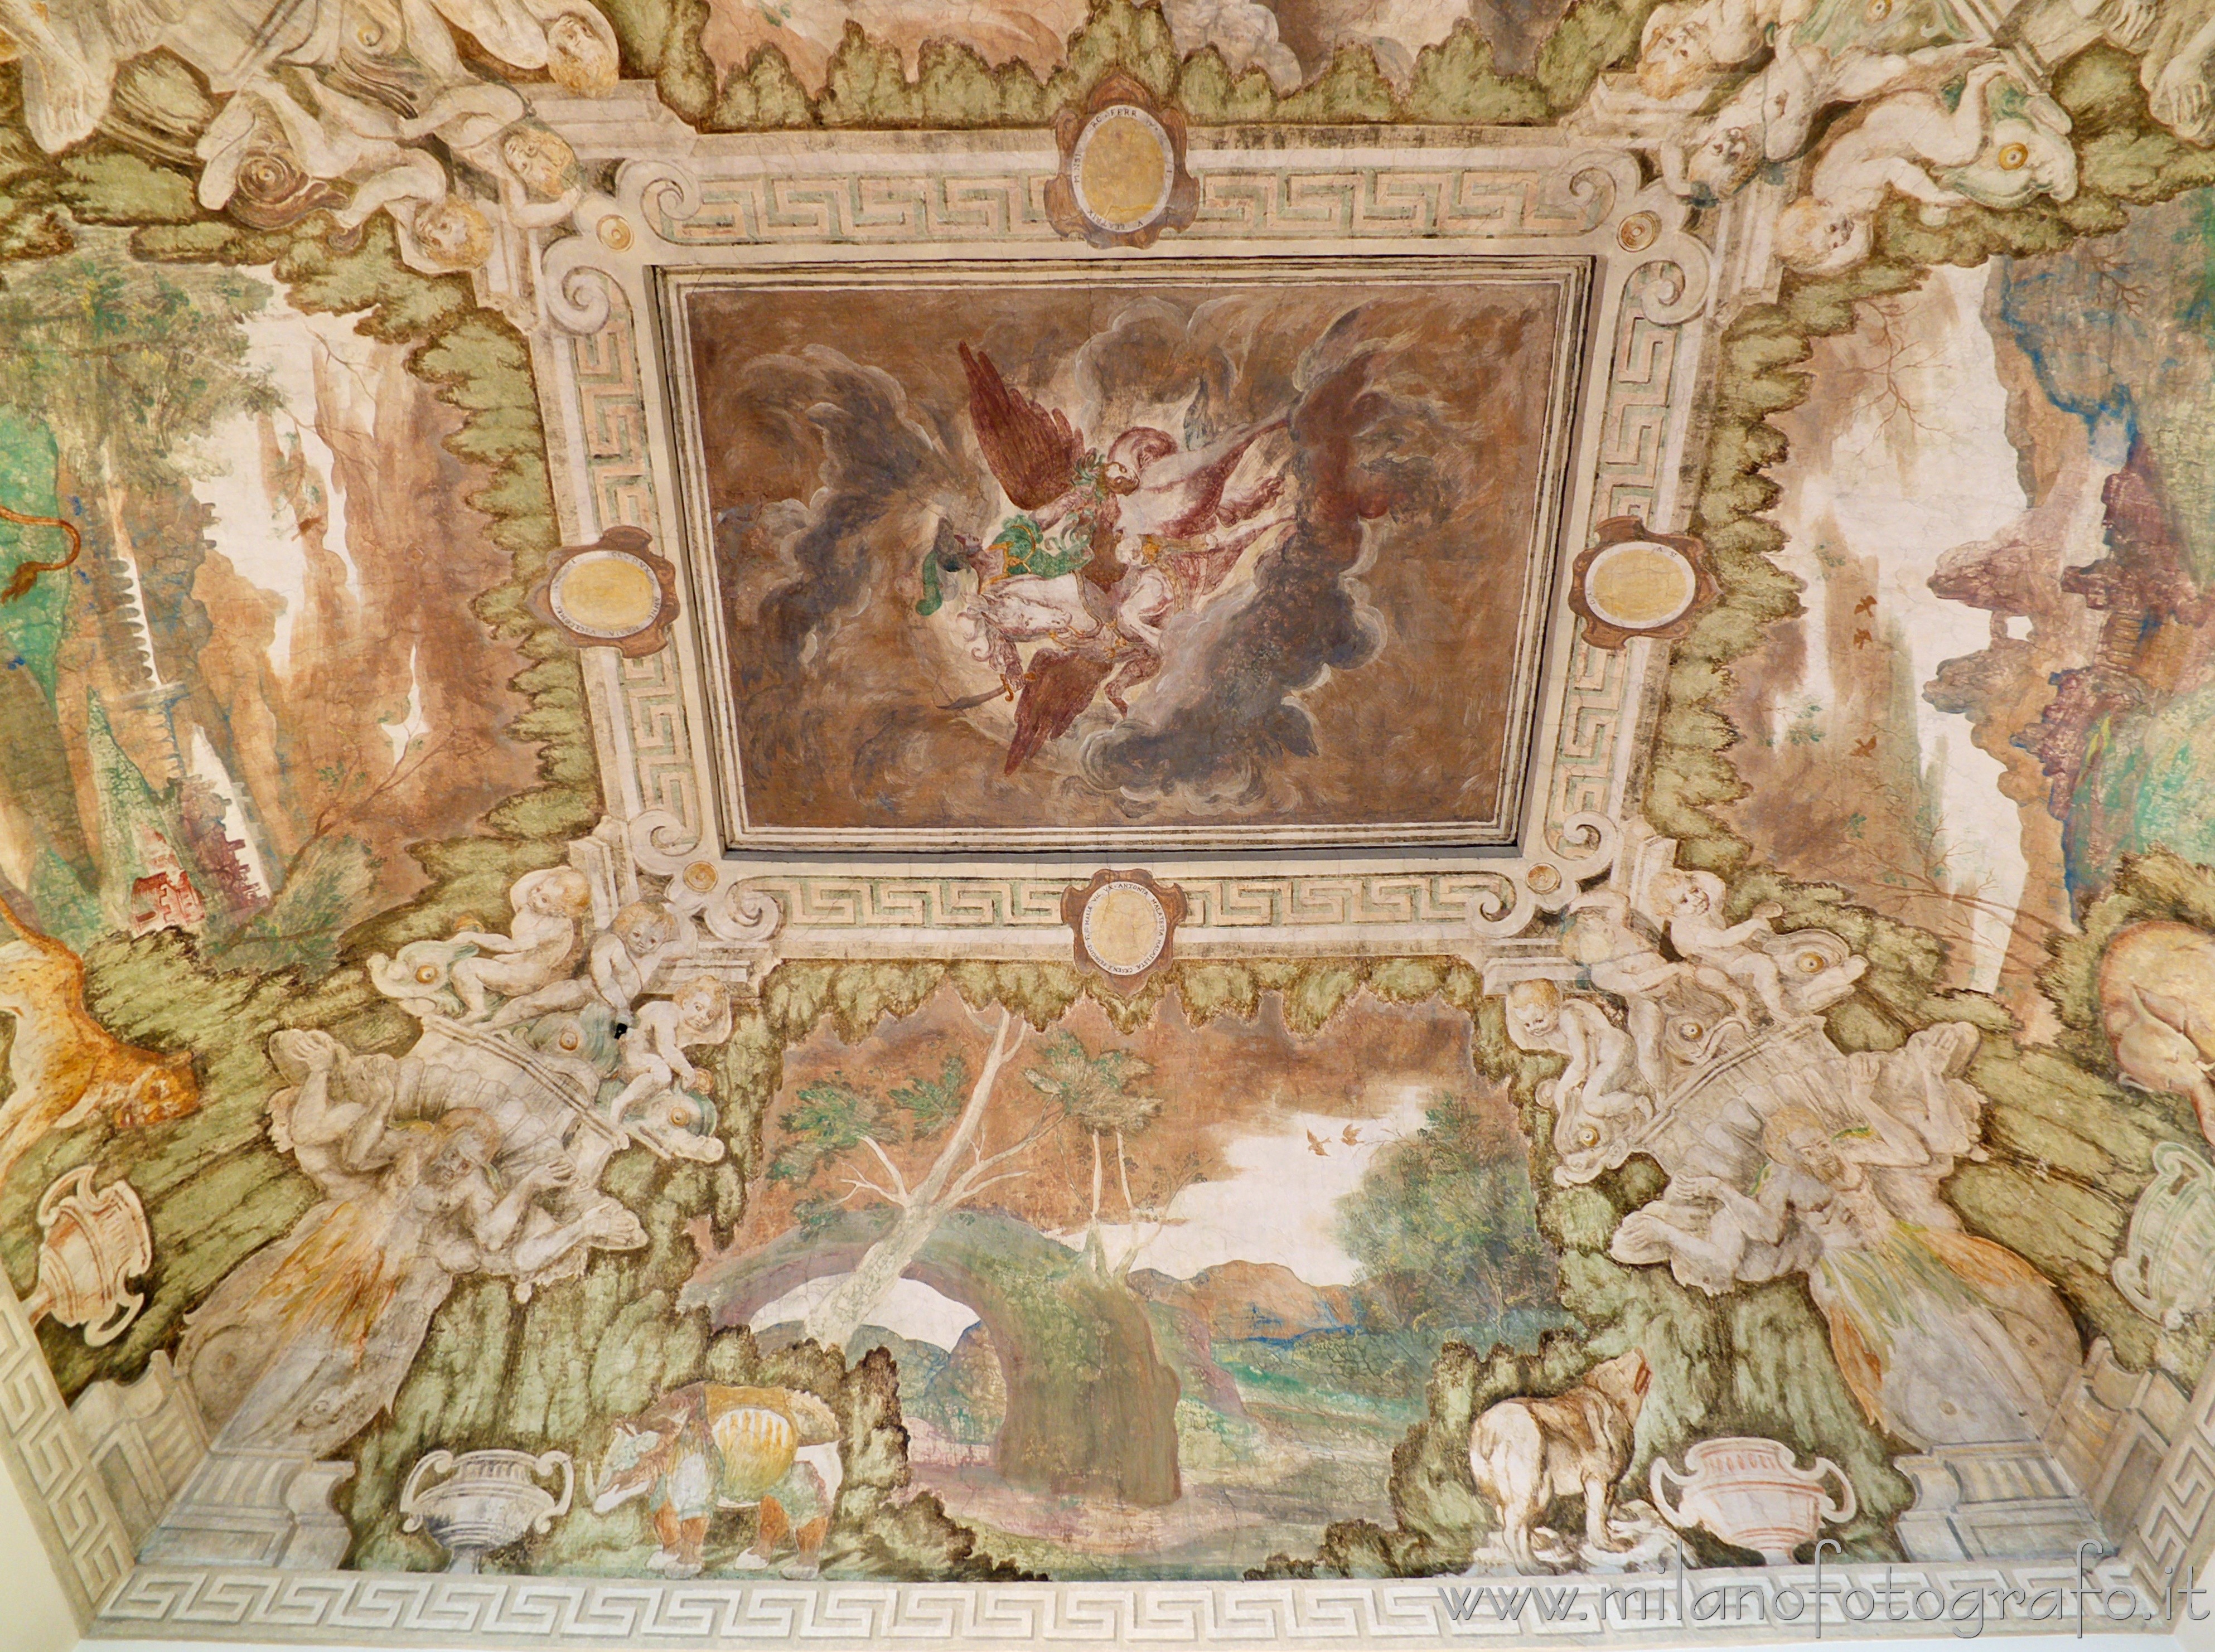 Cavenago di Brianza (Monza e Brianza, Italy): Ceiling of the Hall of the Fountains in Palace Rasini - Cavenago di Brianza (Monza e Brianza, Italy)